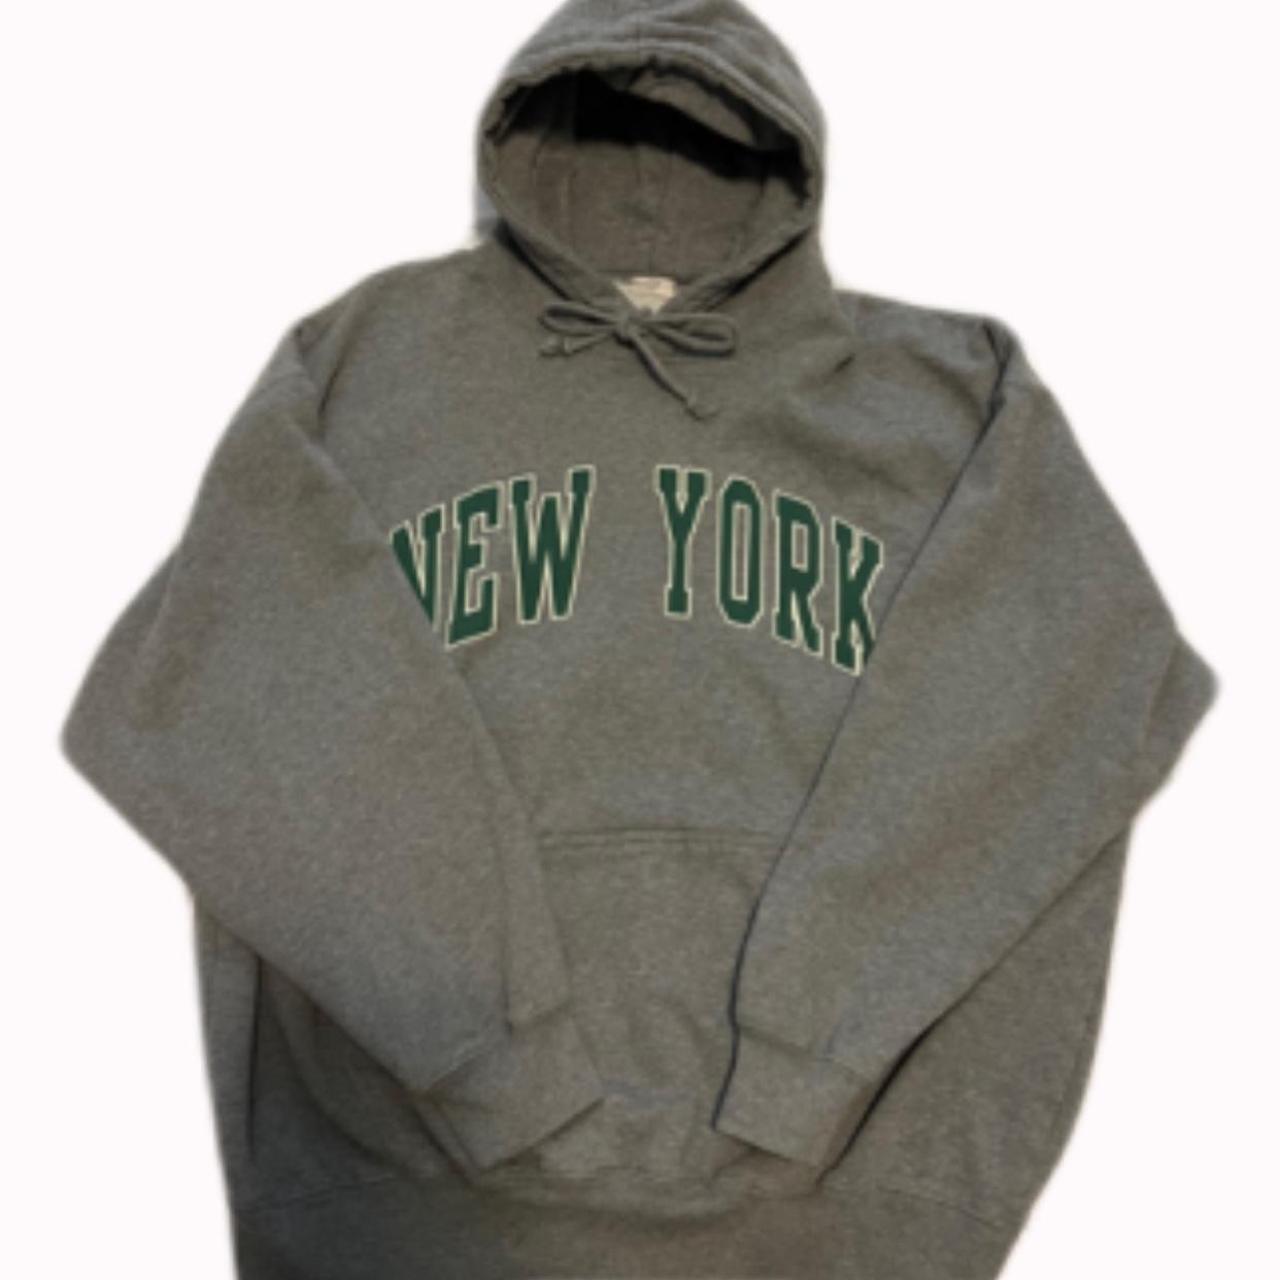 Brandy Melville oversized new york hoodie zip up Green - $56